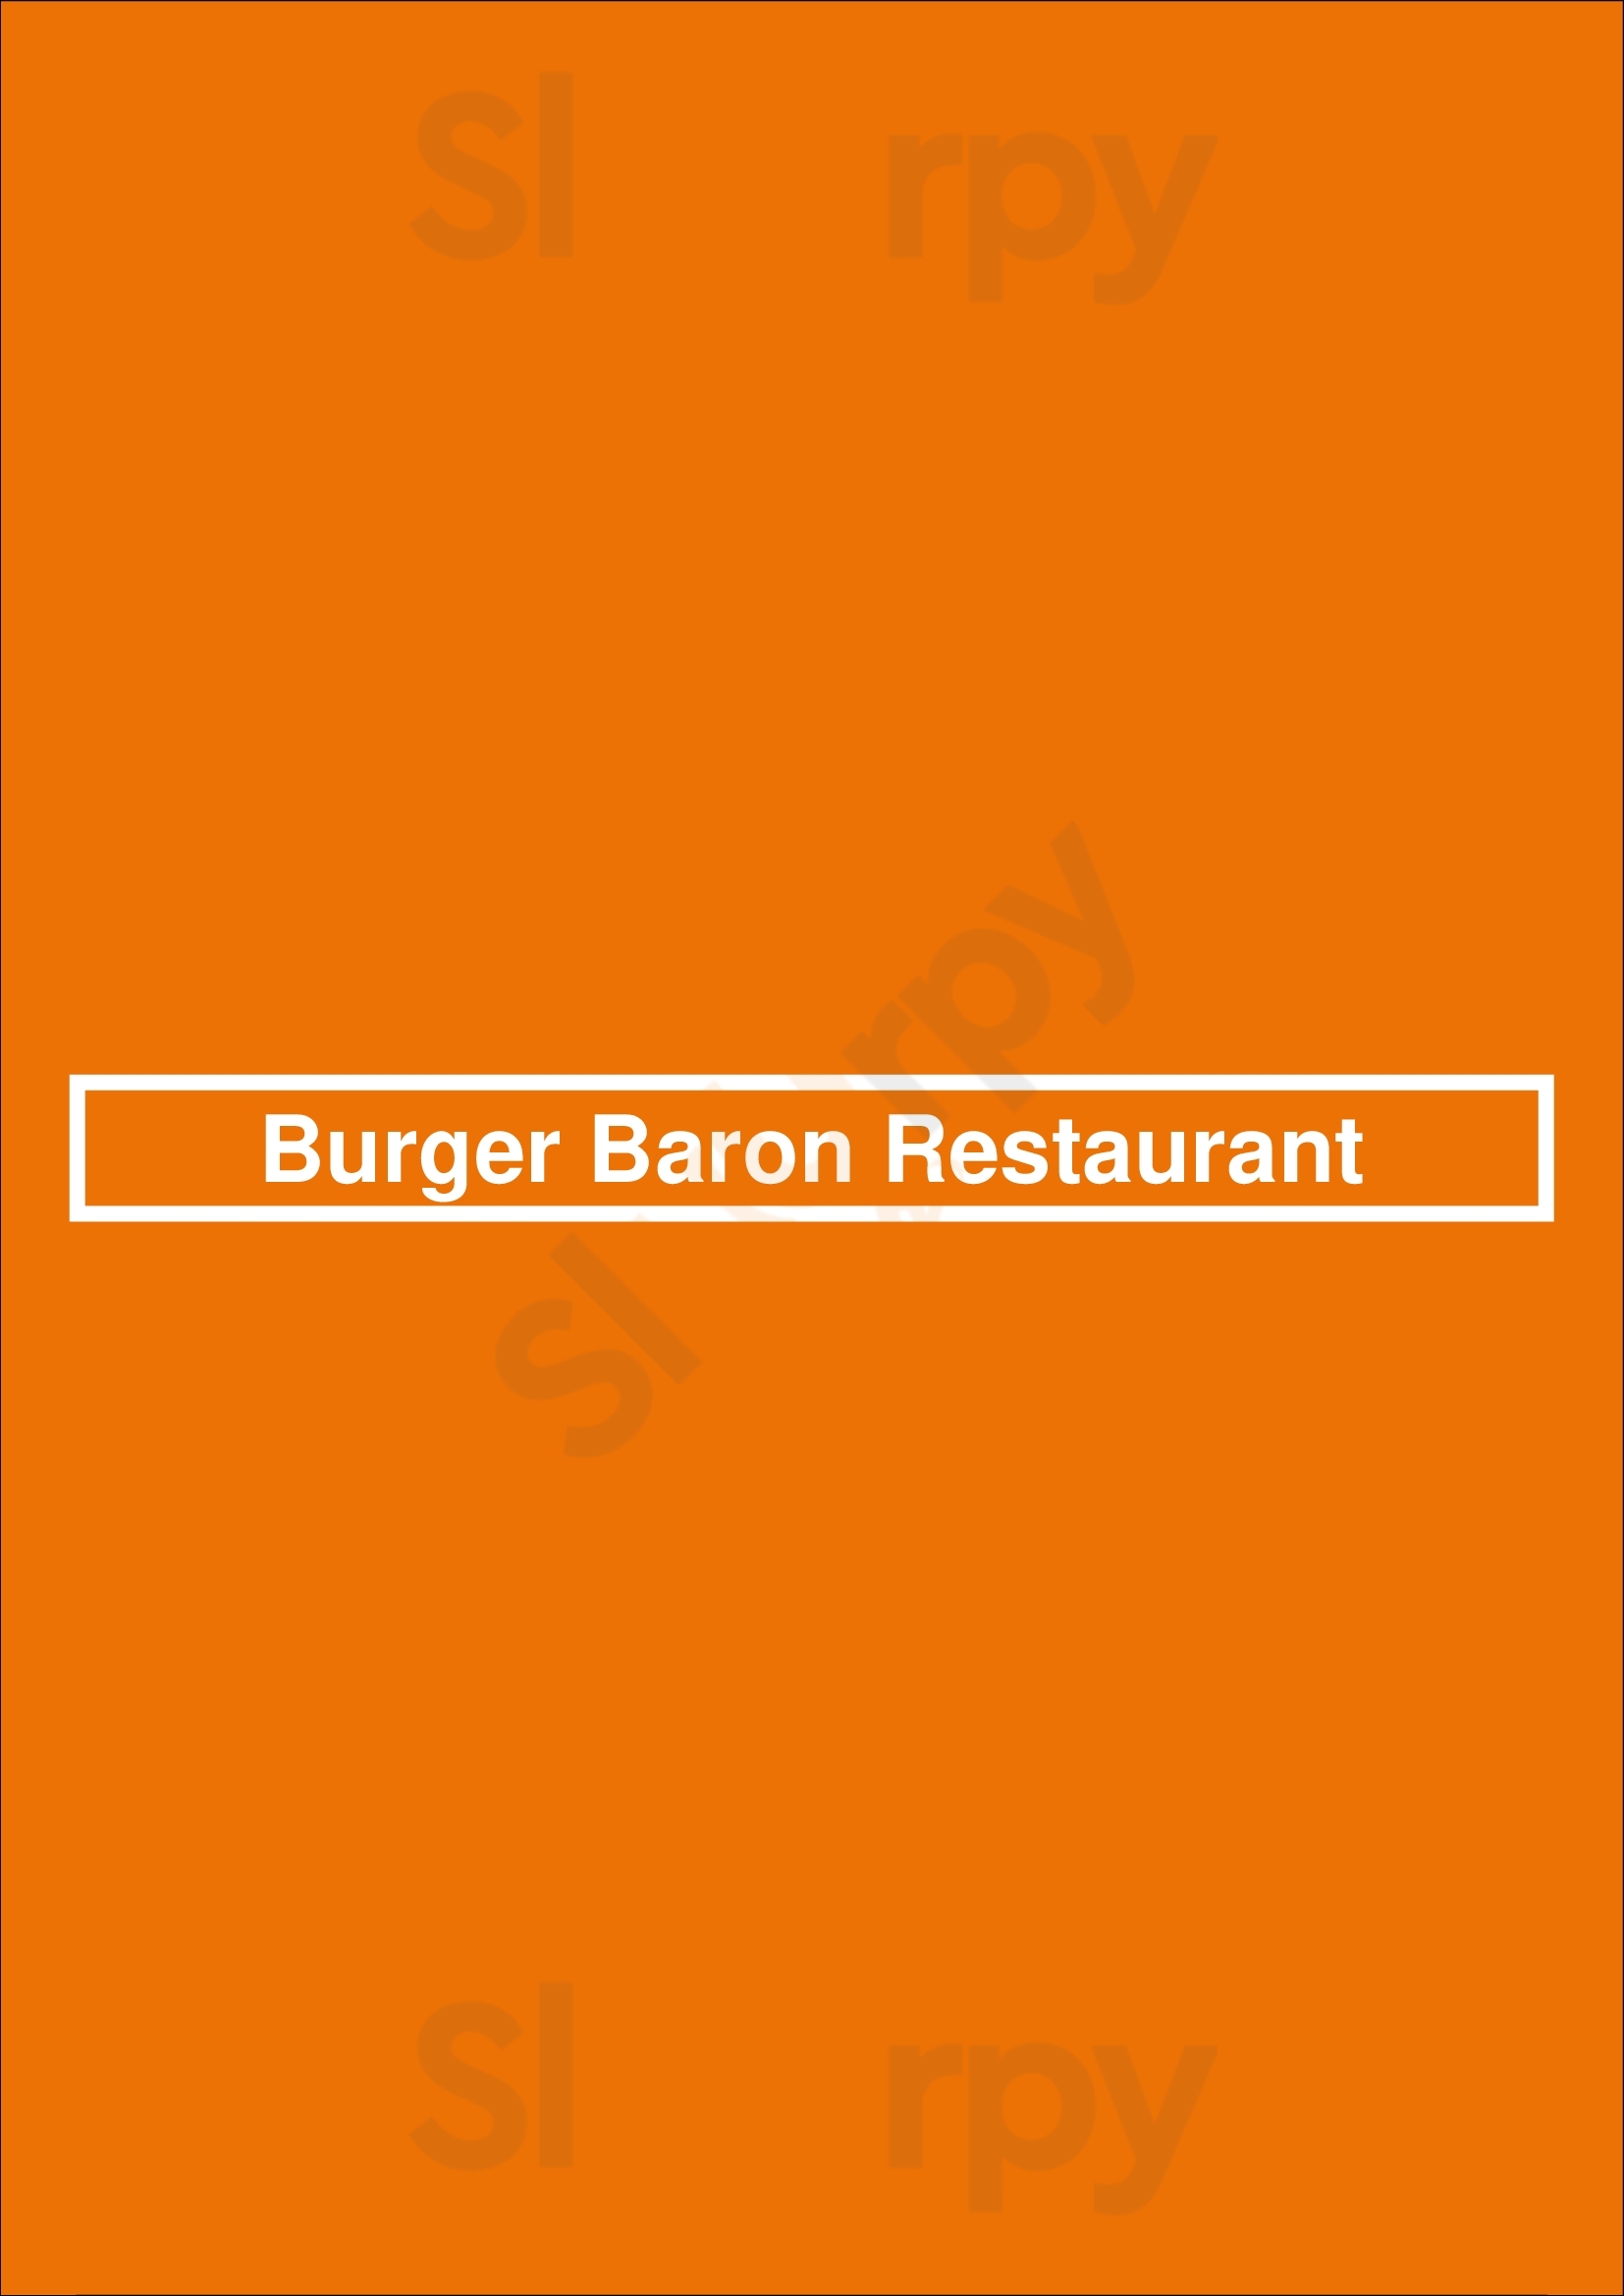 Burger Baron Restaurant Chicago Menu - 1